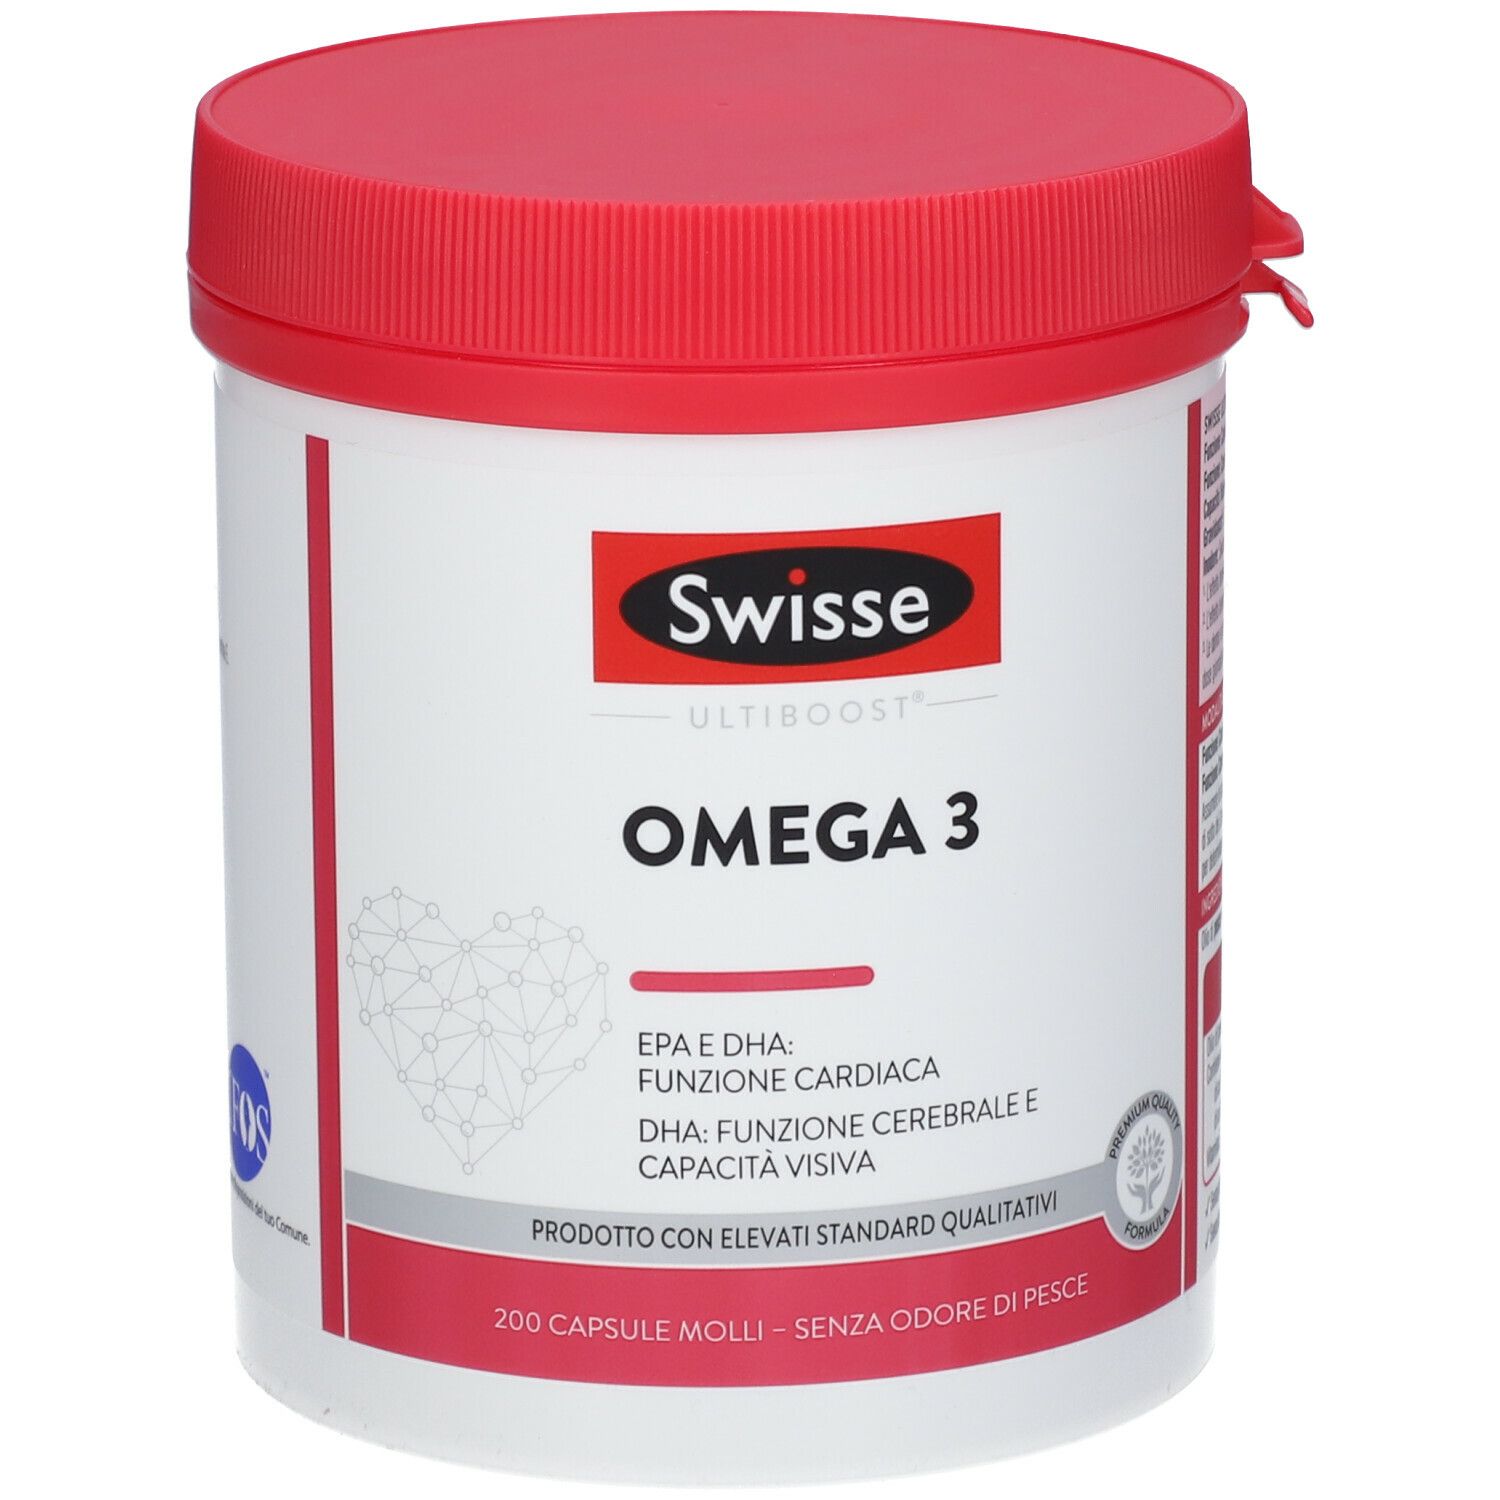 Swisse Ultiboost Omega 3